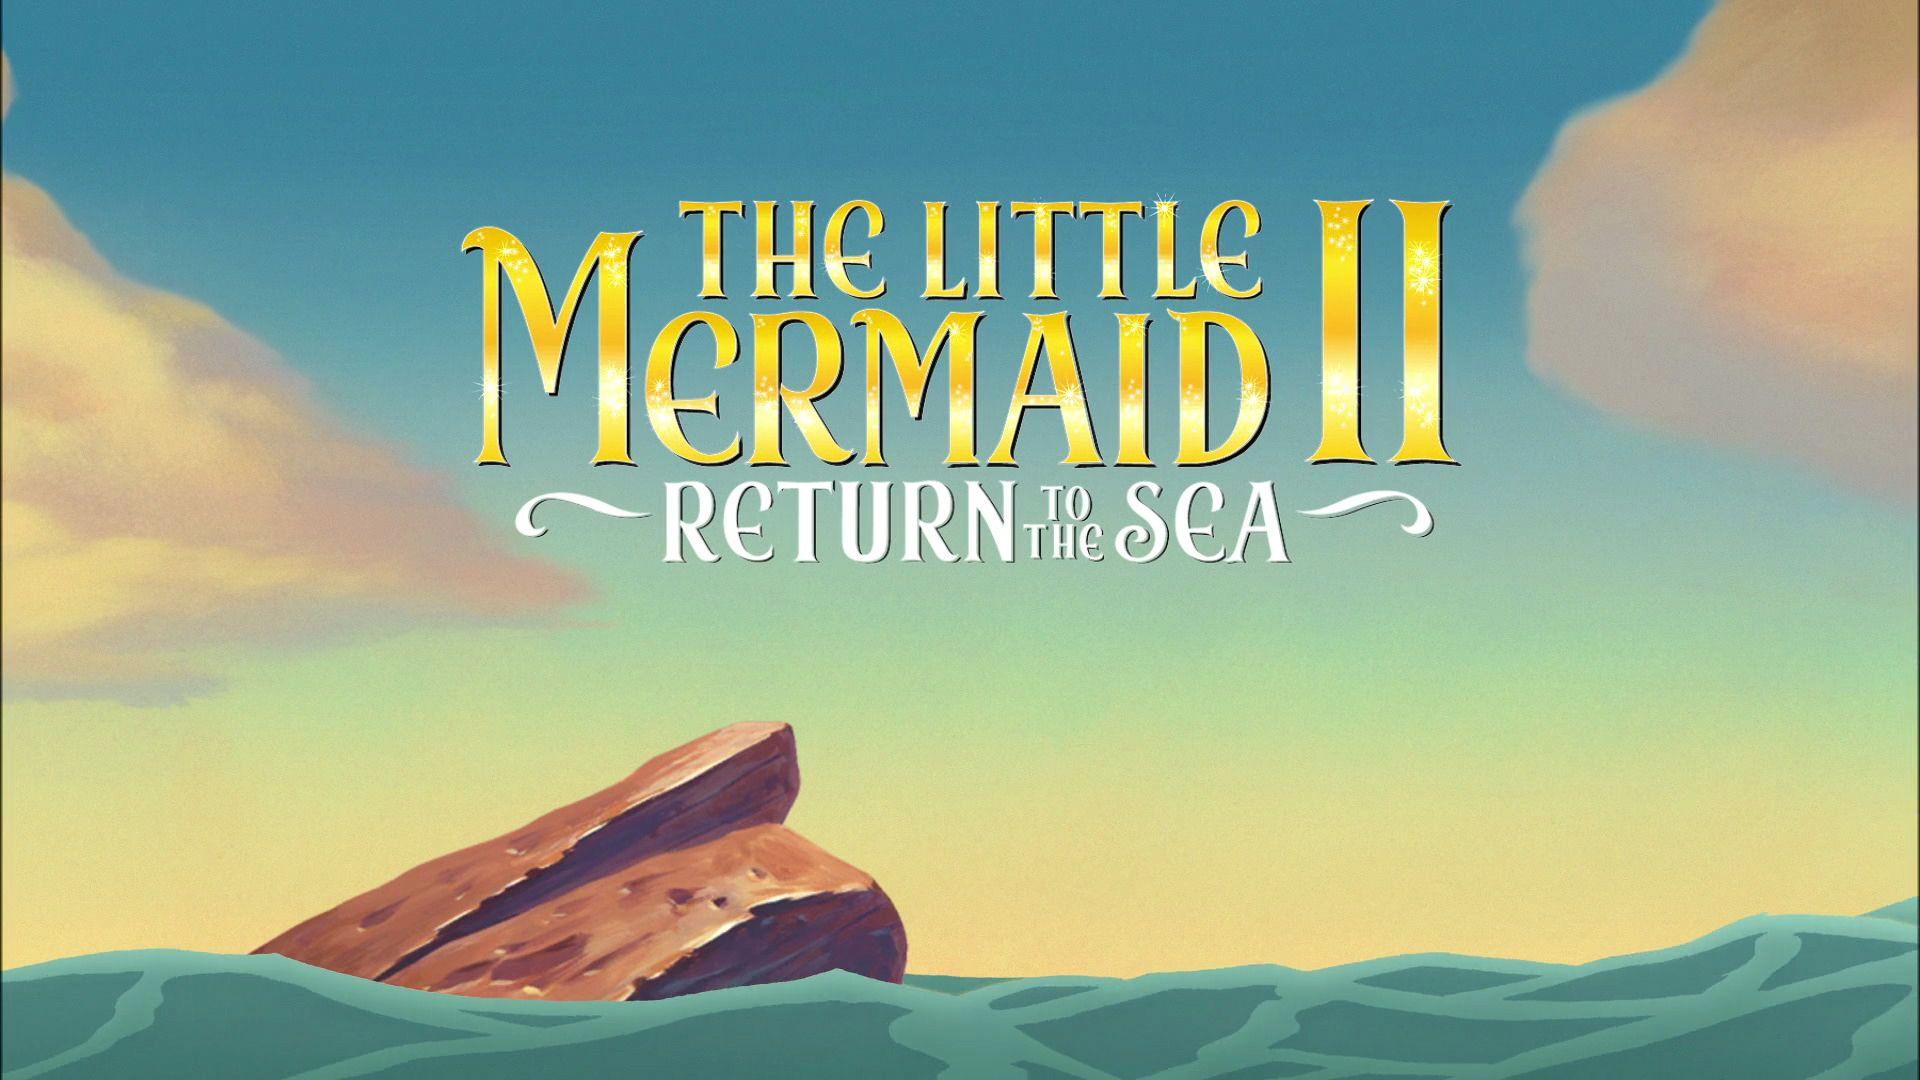 The Little Mermaid 2 Logo - Image - The Little Mermaid II Return to the Sea Title Card.jpg ...